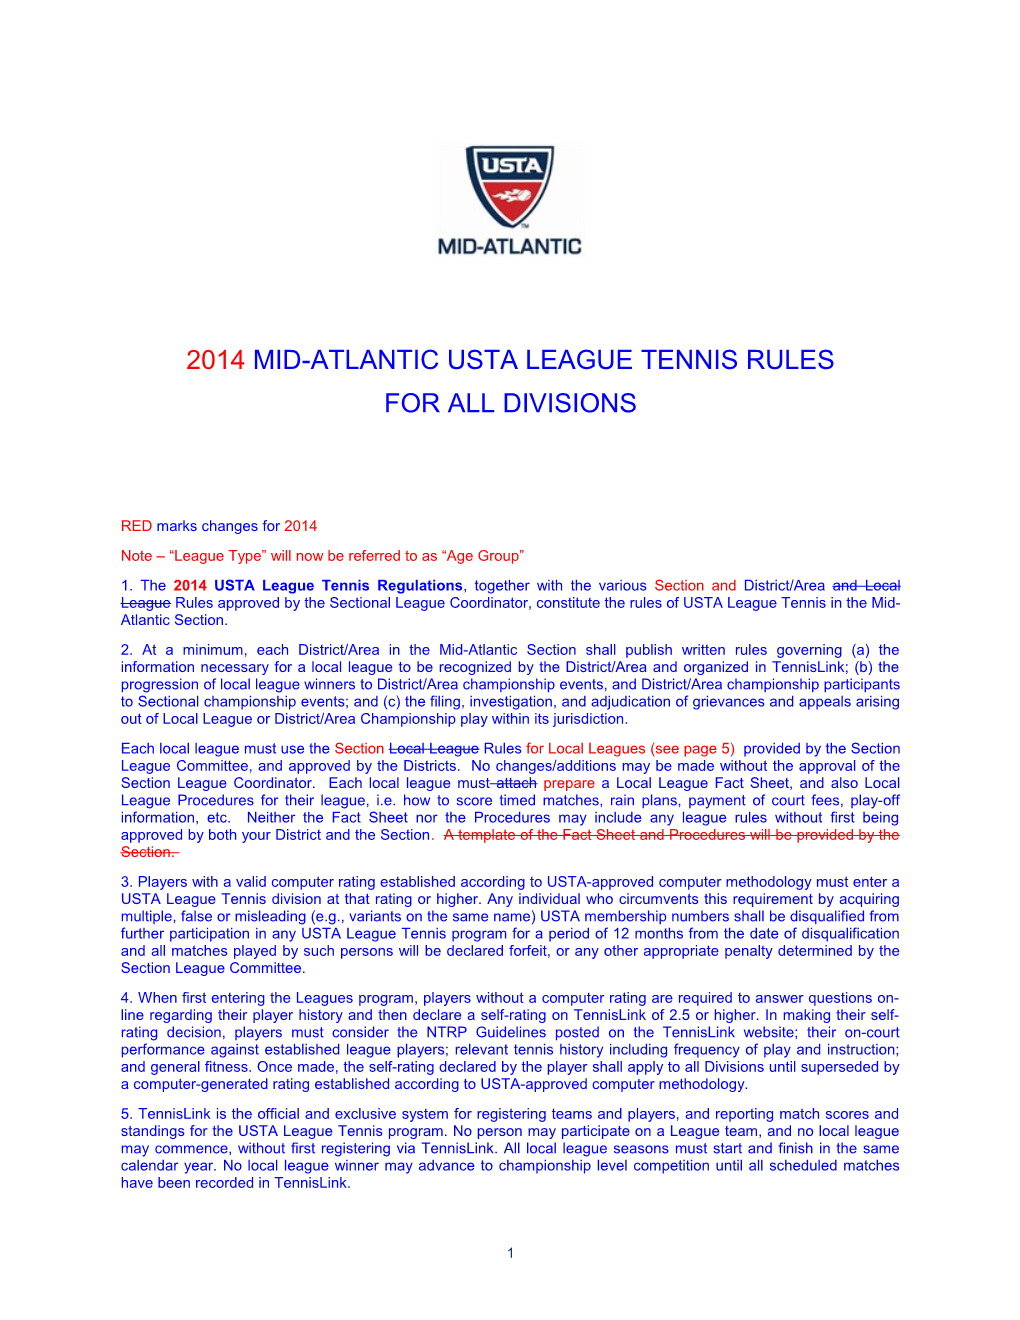 2014 Mid-Atlantic Usta League Tennis Rules